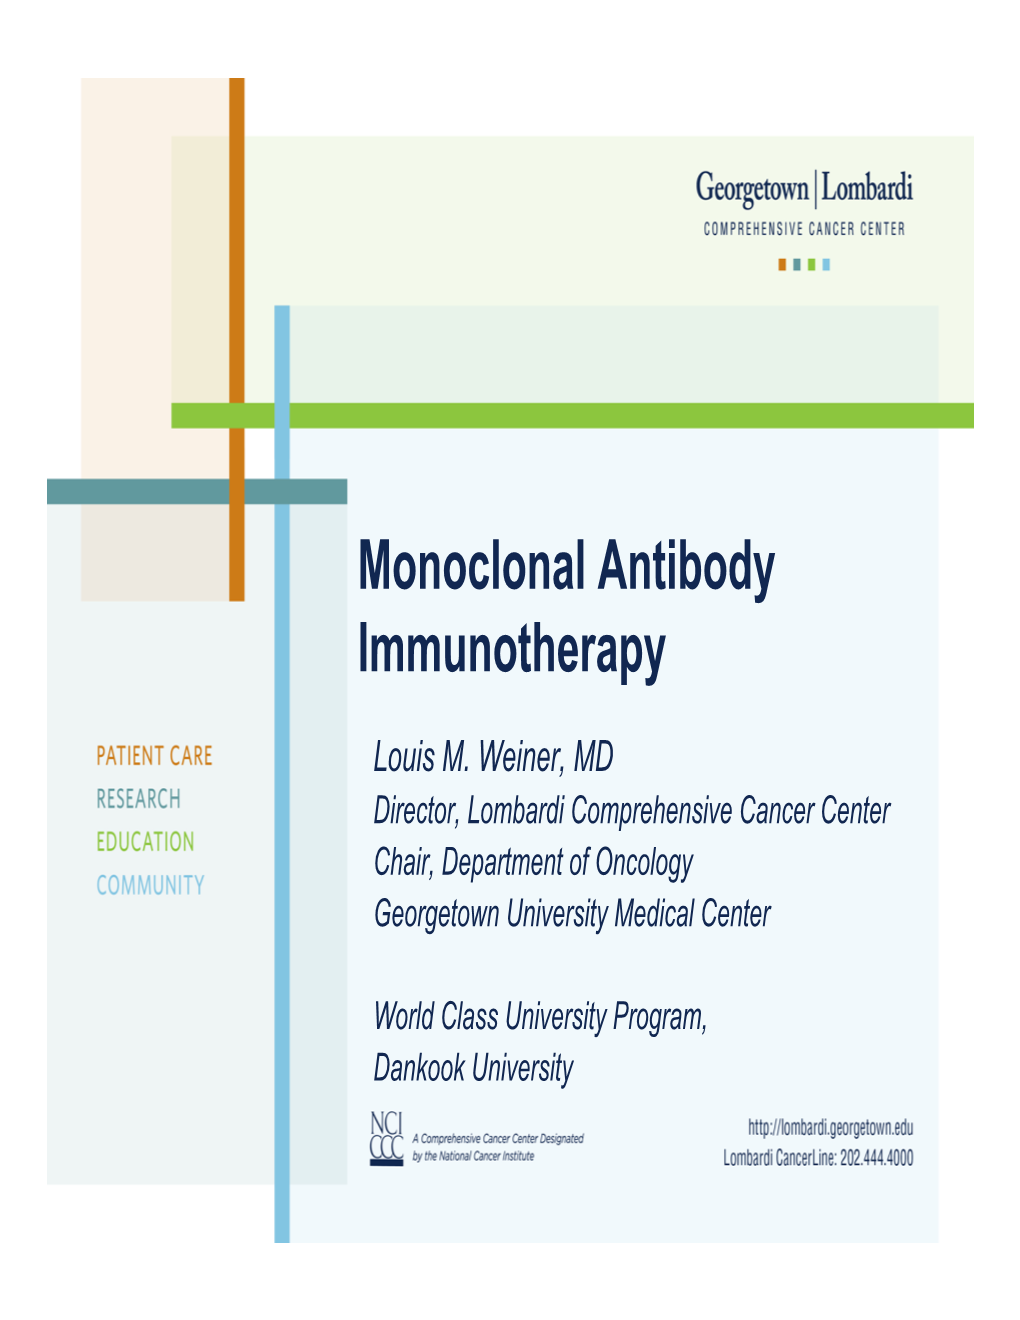 Monoclonal Antibody Immunotherapy